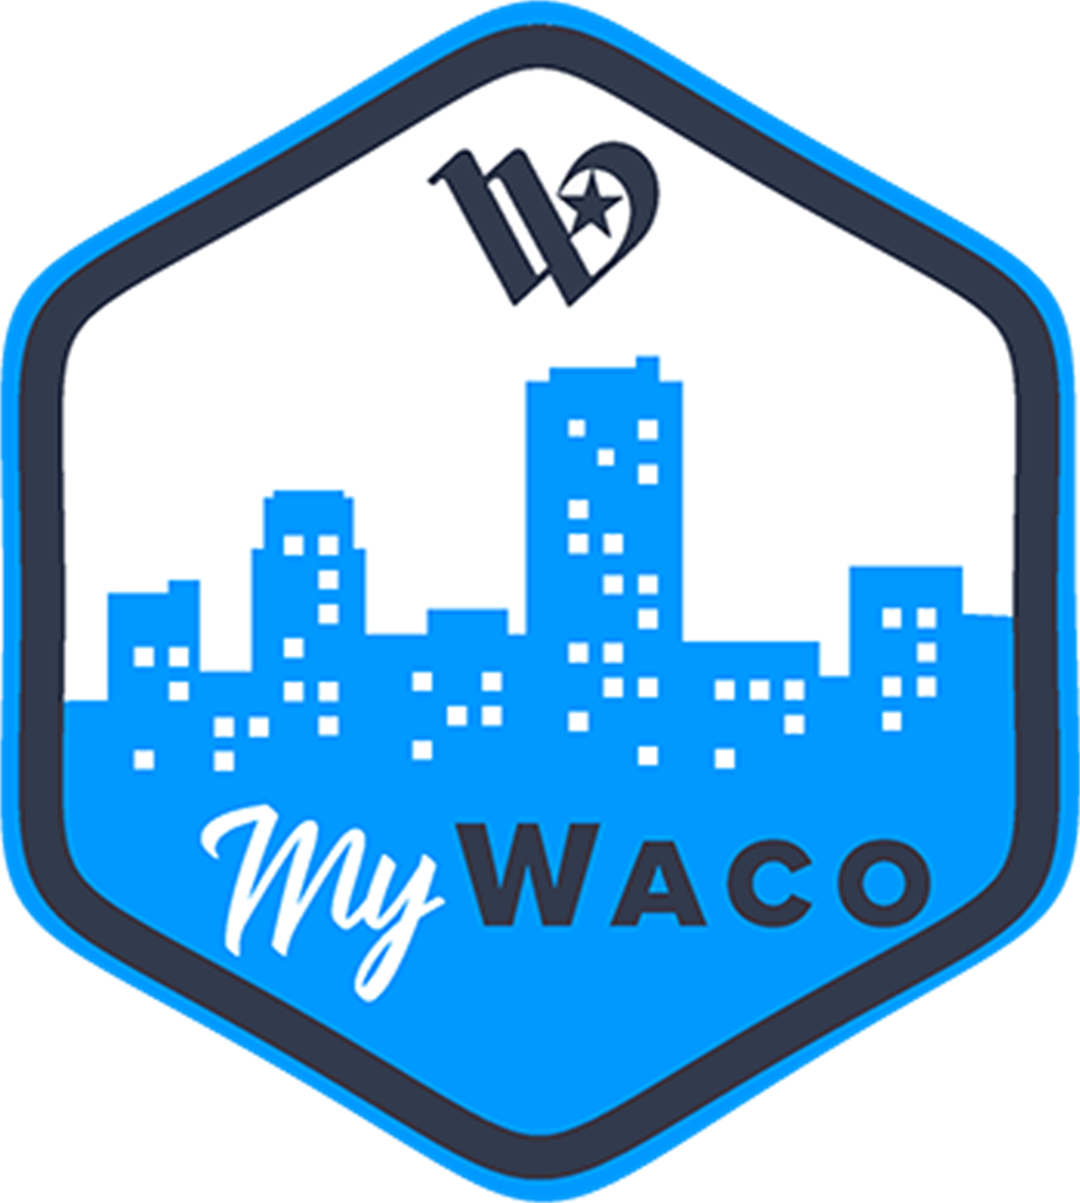 Contact The City City Of Waco